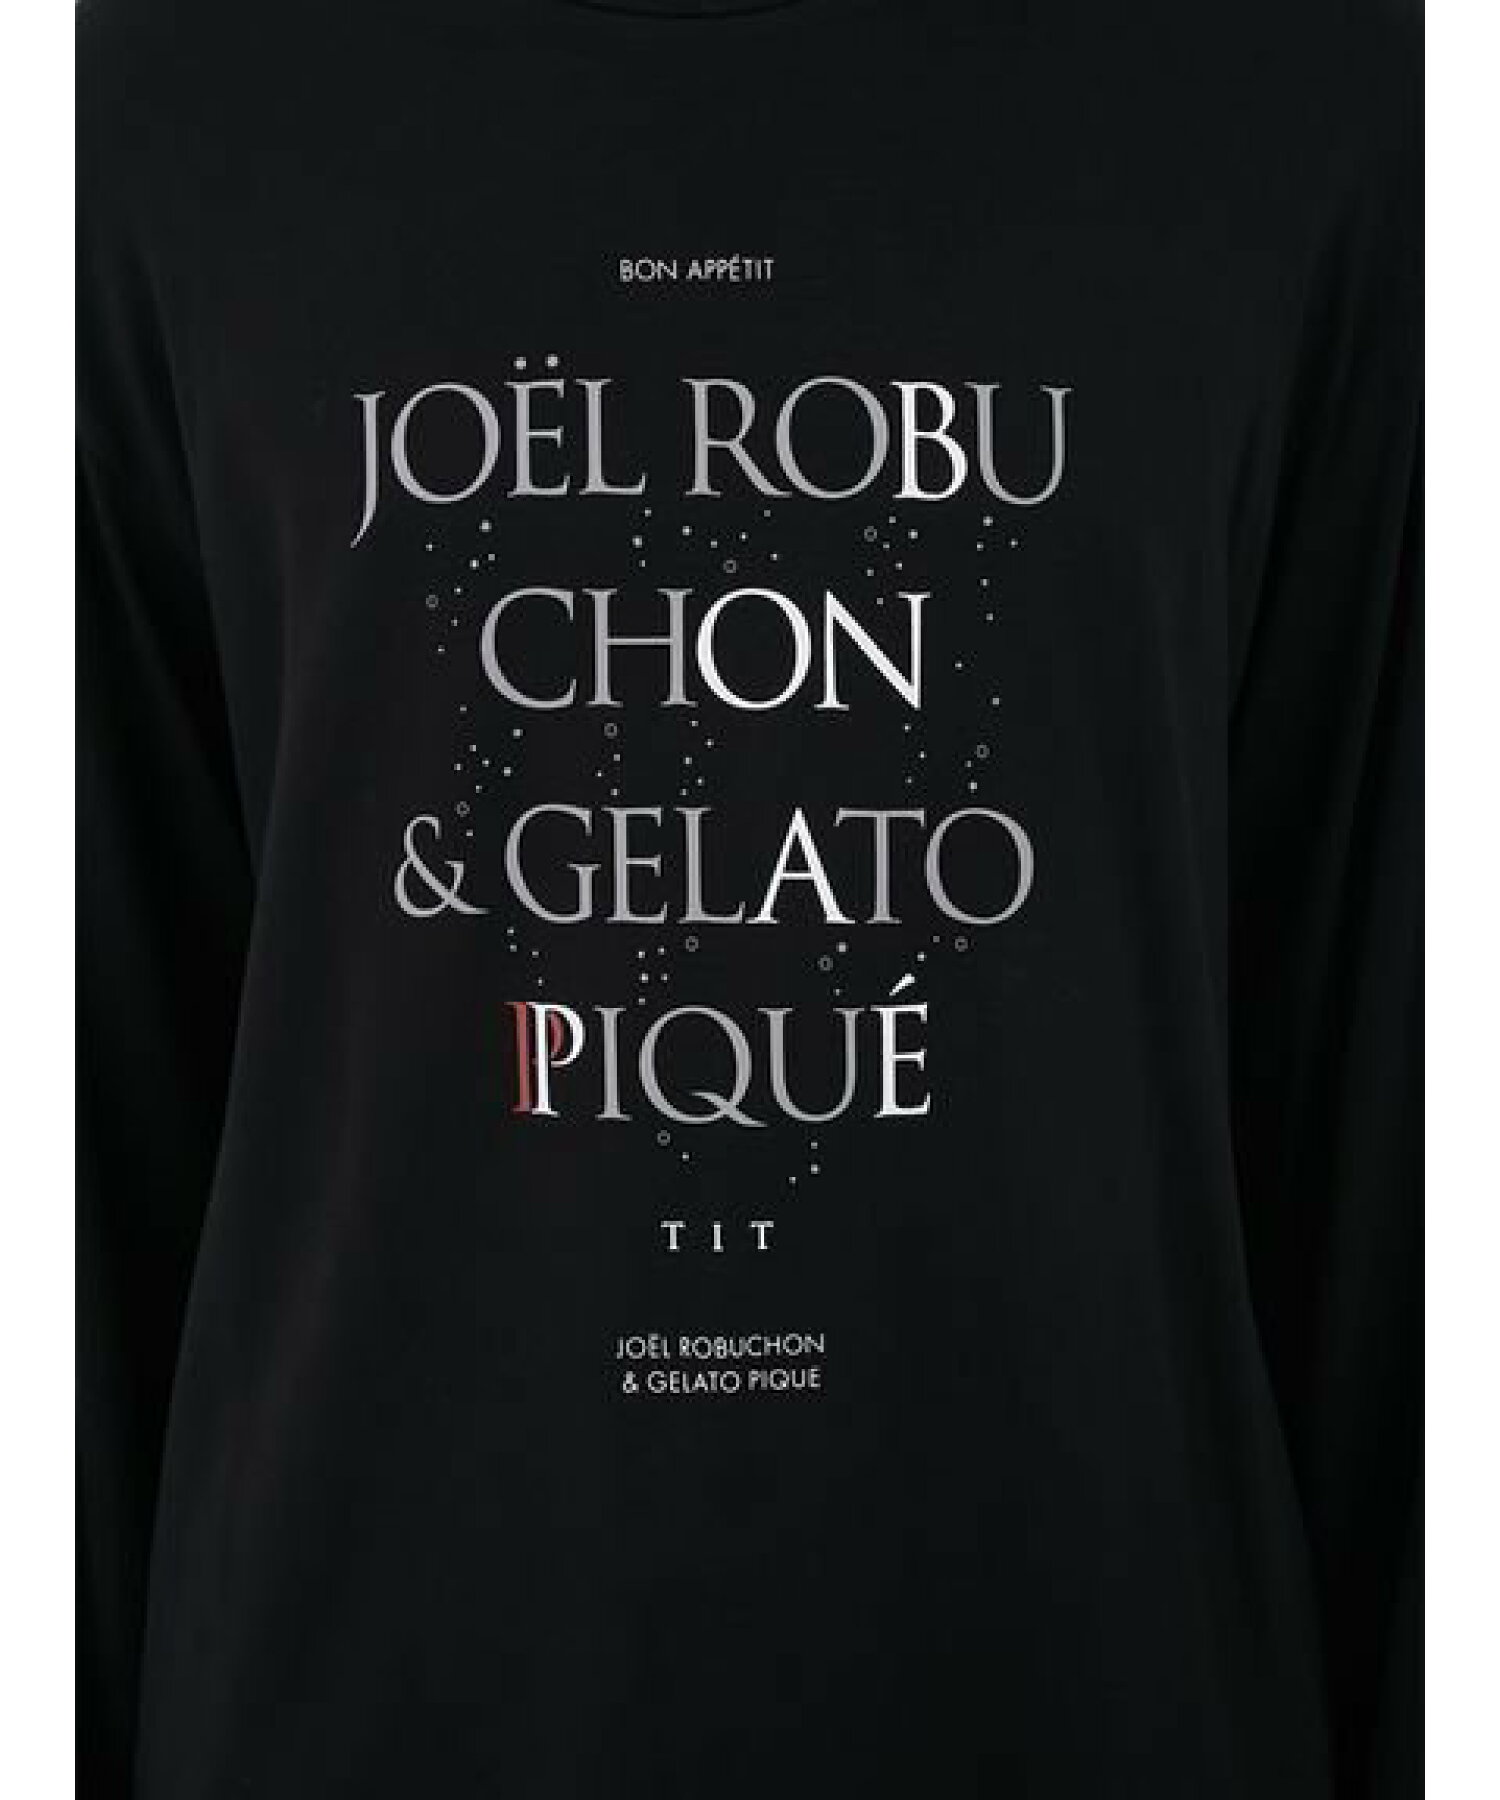 【JOEL ROBUCHON】【HOMME】ワンポイントロゴロングTシャツ